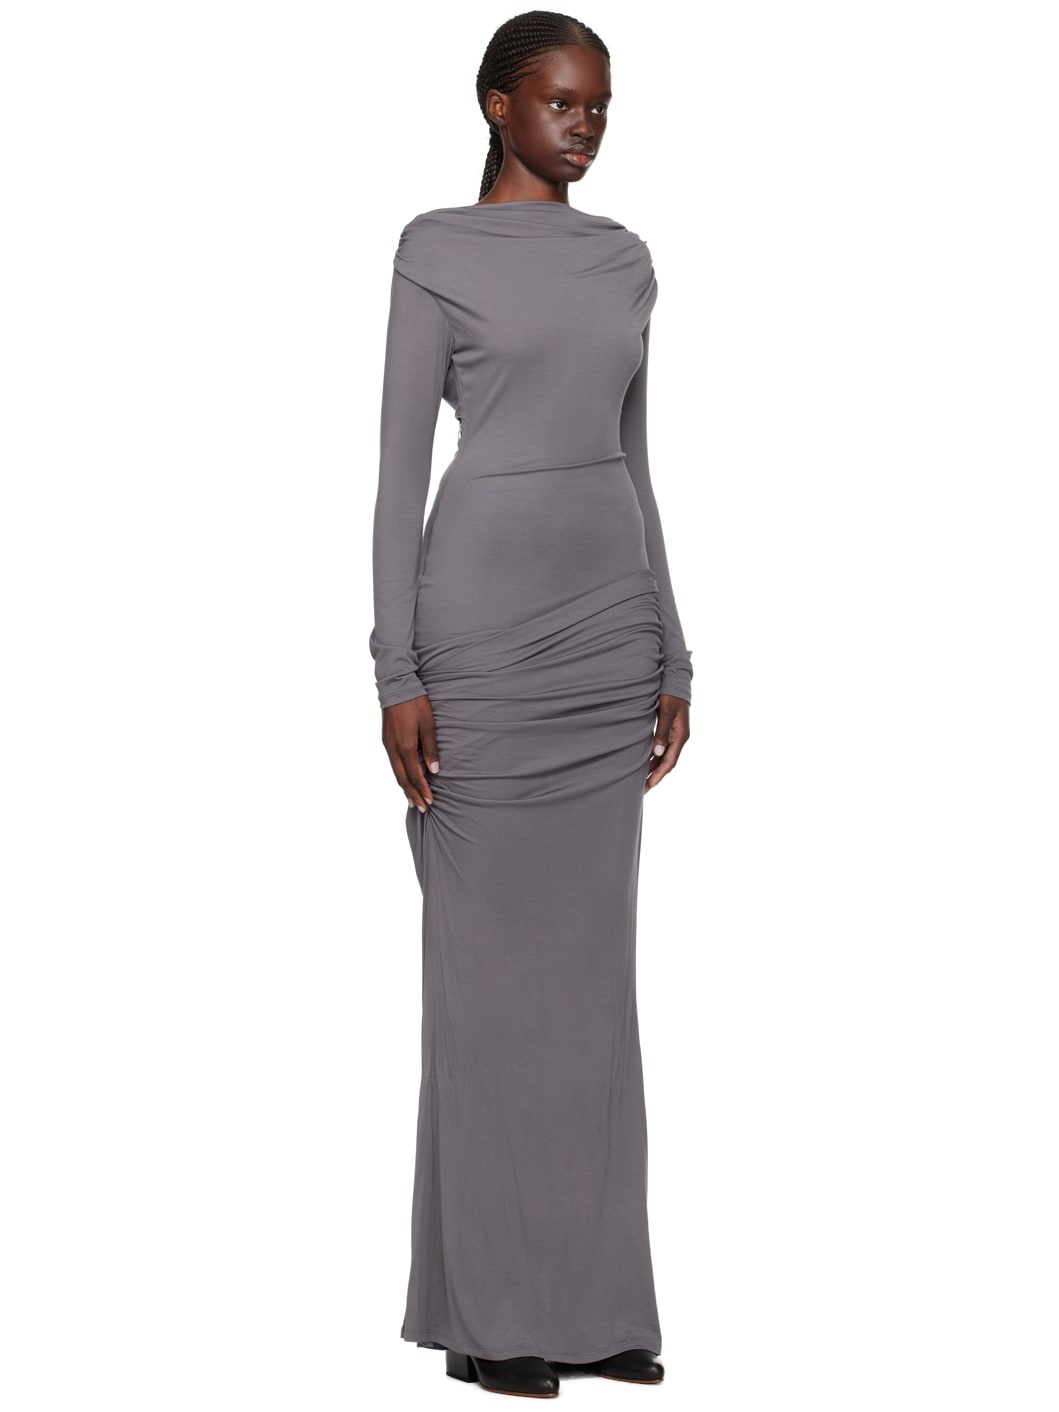 SSENSE Exclusive Gray Maxi Dress - 2